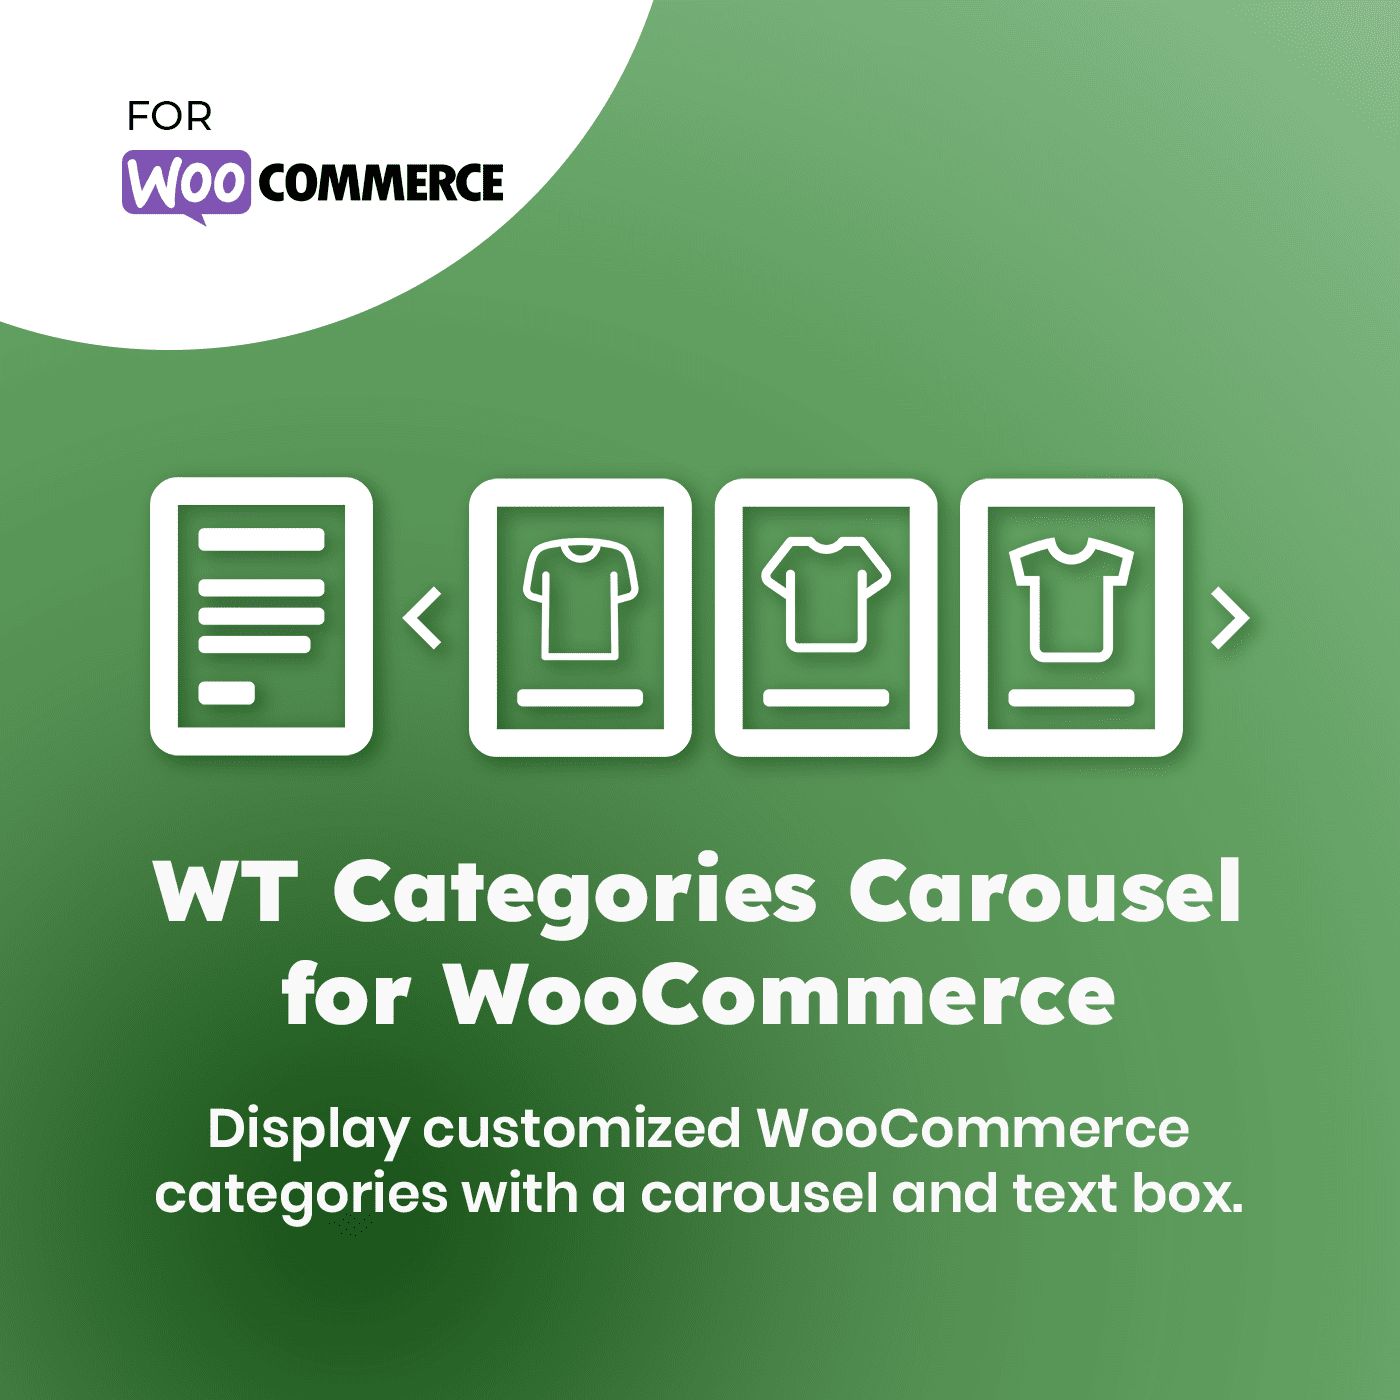 WT Categories Carousel for WooCommerce - WordPress Plugin for WooCommerce